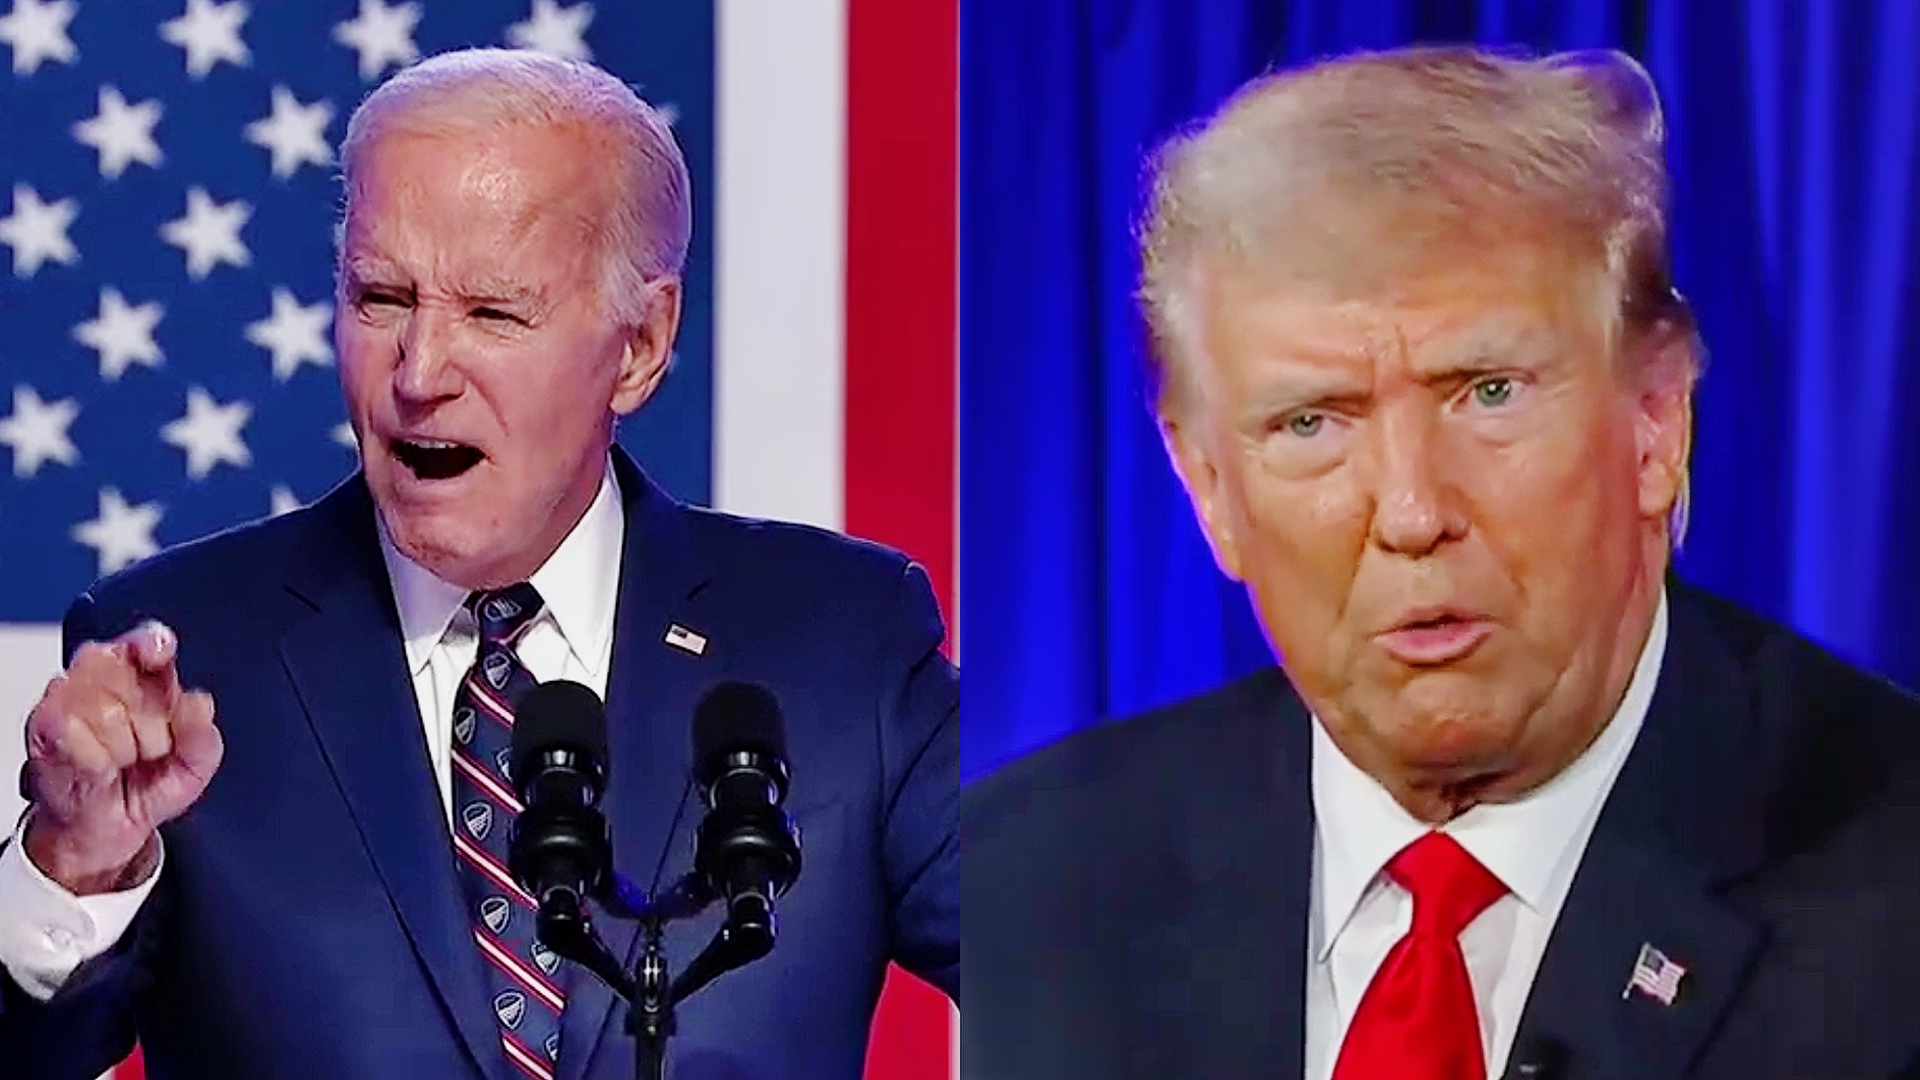 Biden Goes OFF on Trump in Blistering Jan. 6 Speech - FULL Video and Transcript